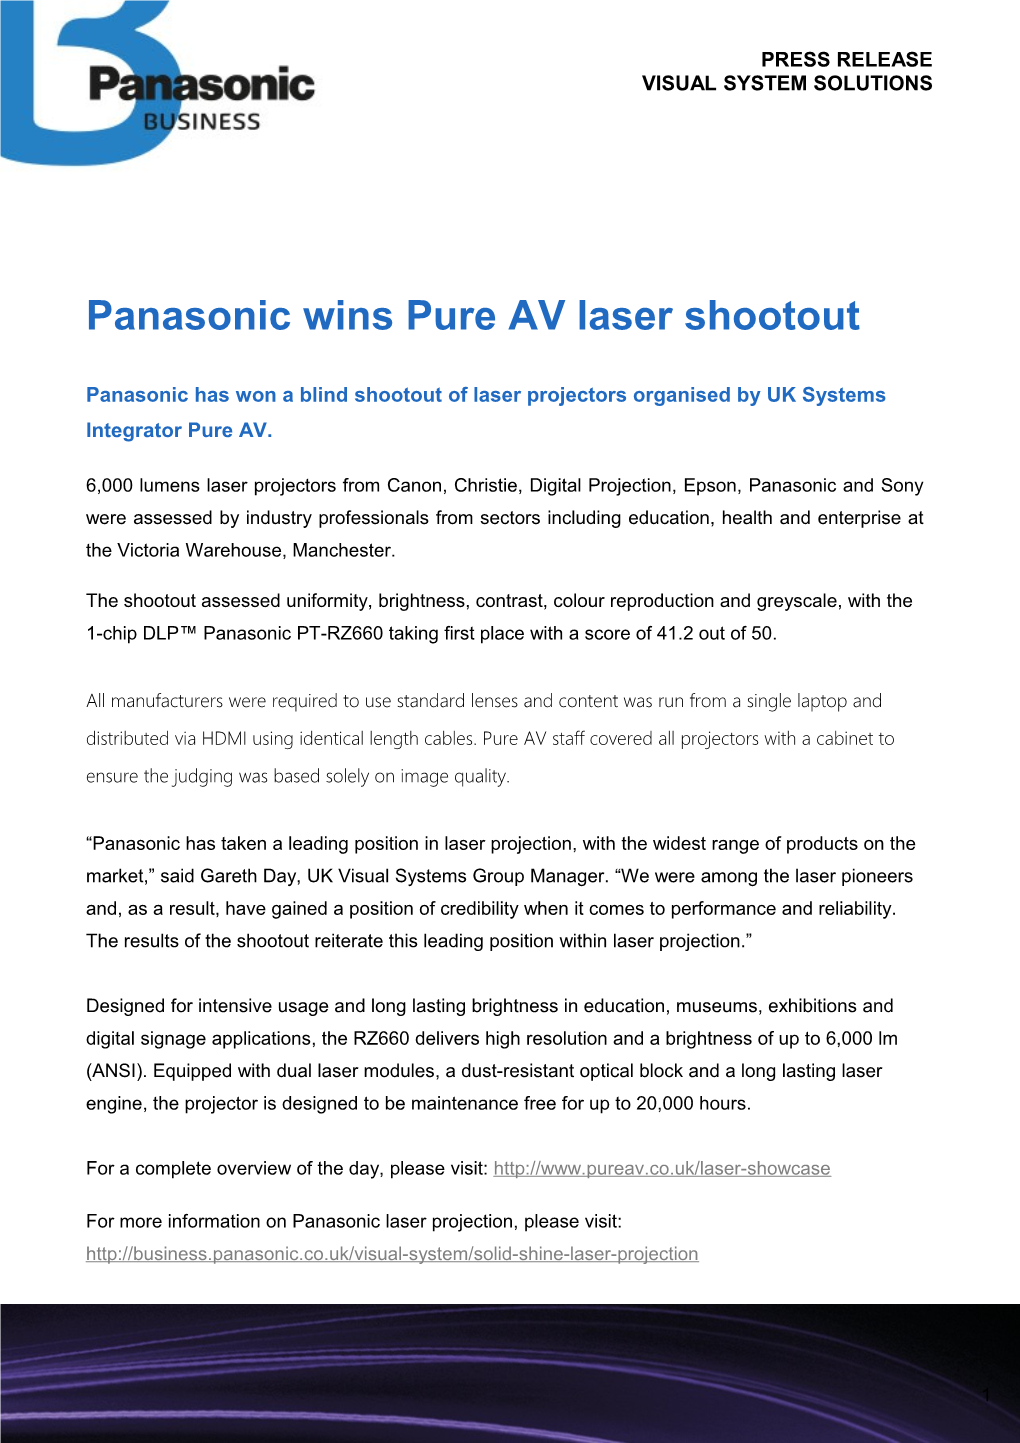 Panasonic Wins Pure AV Laser Shootout